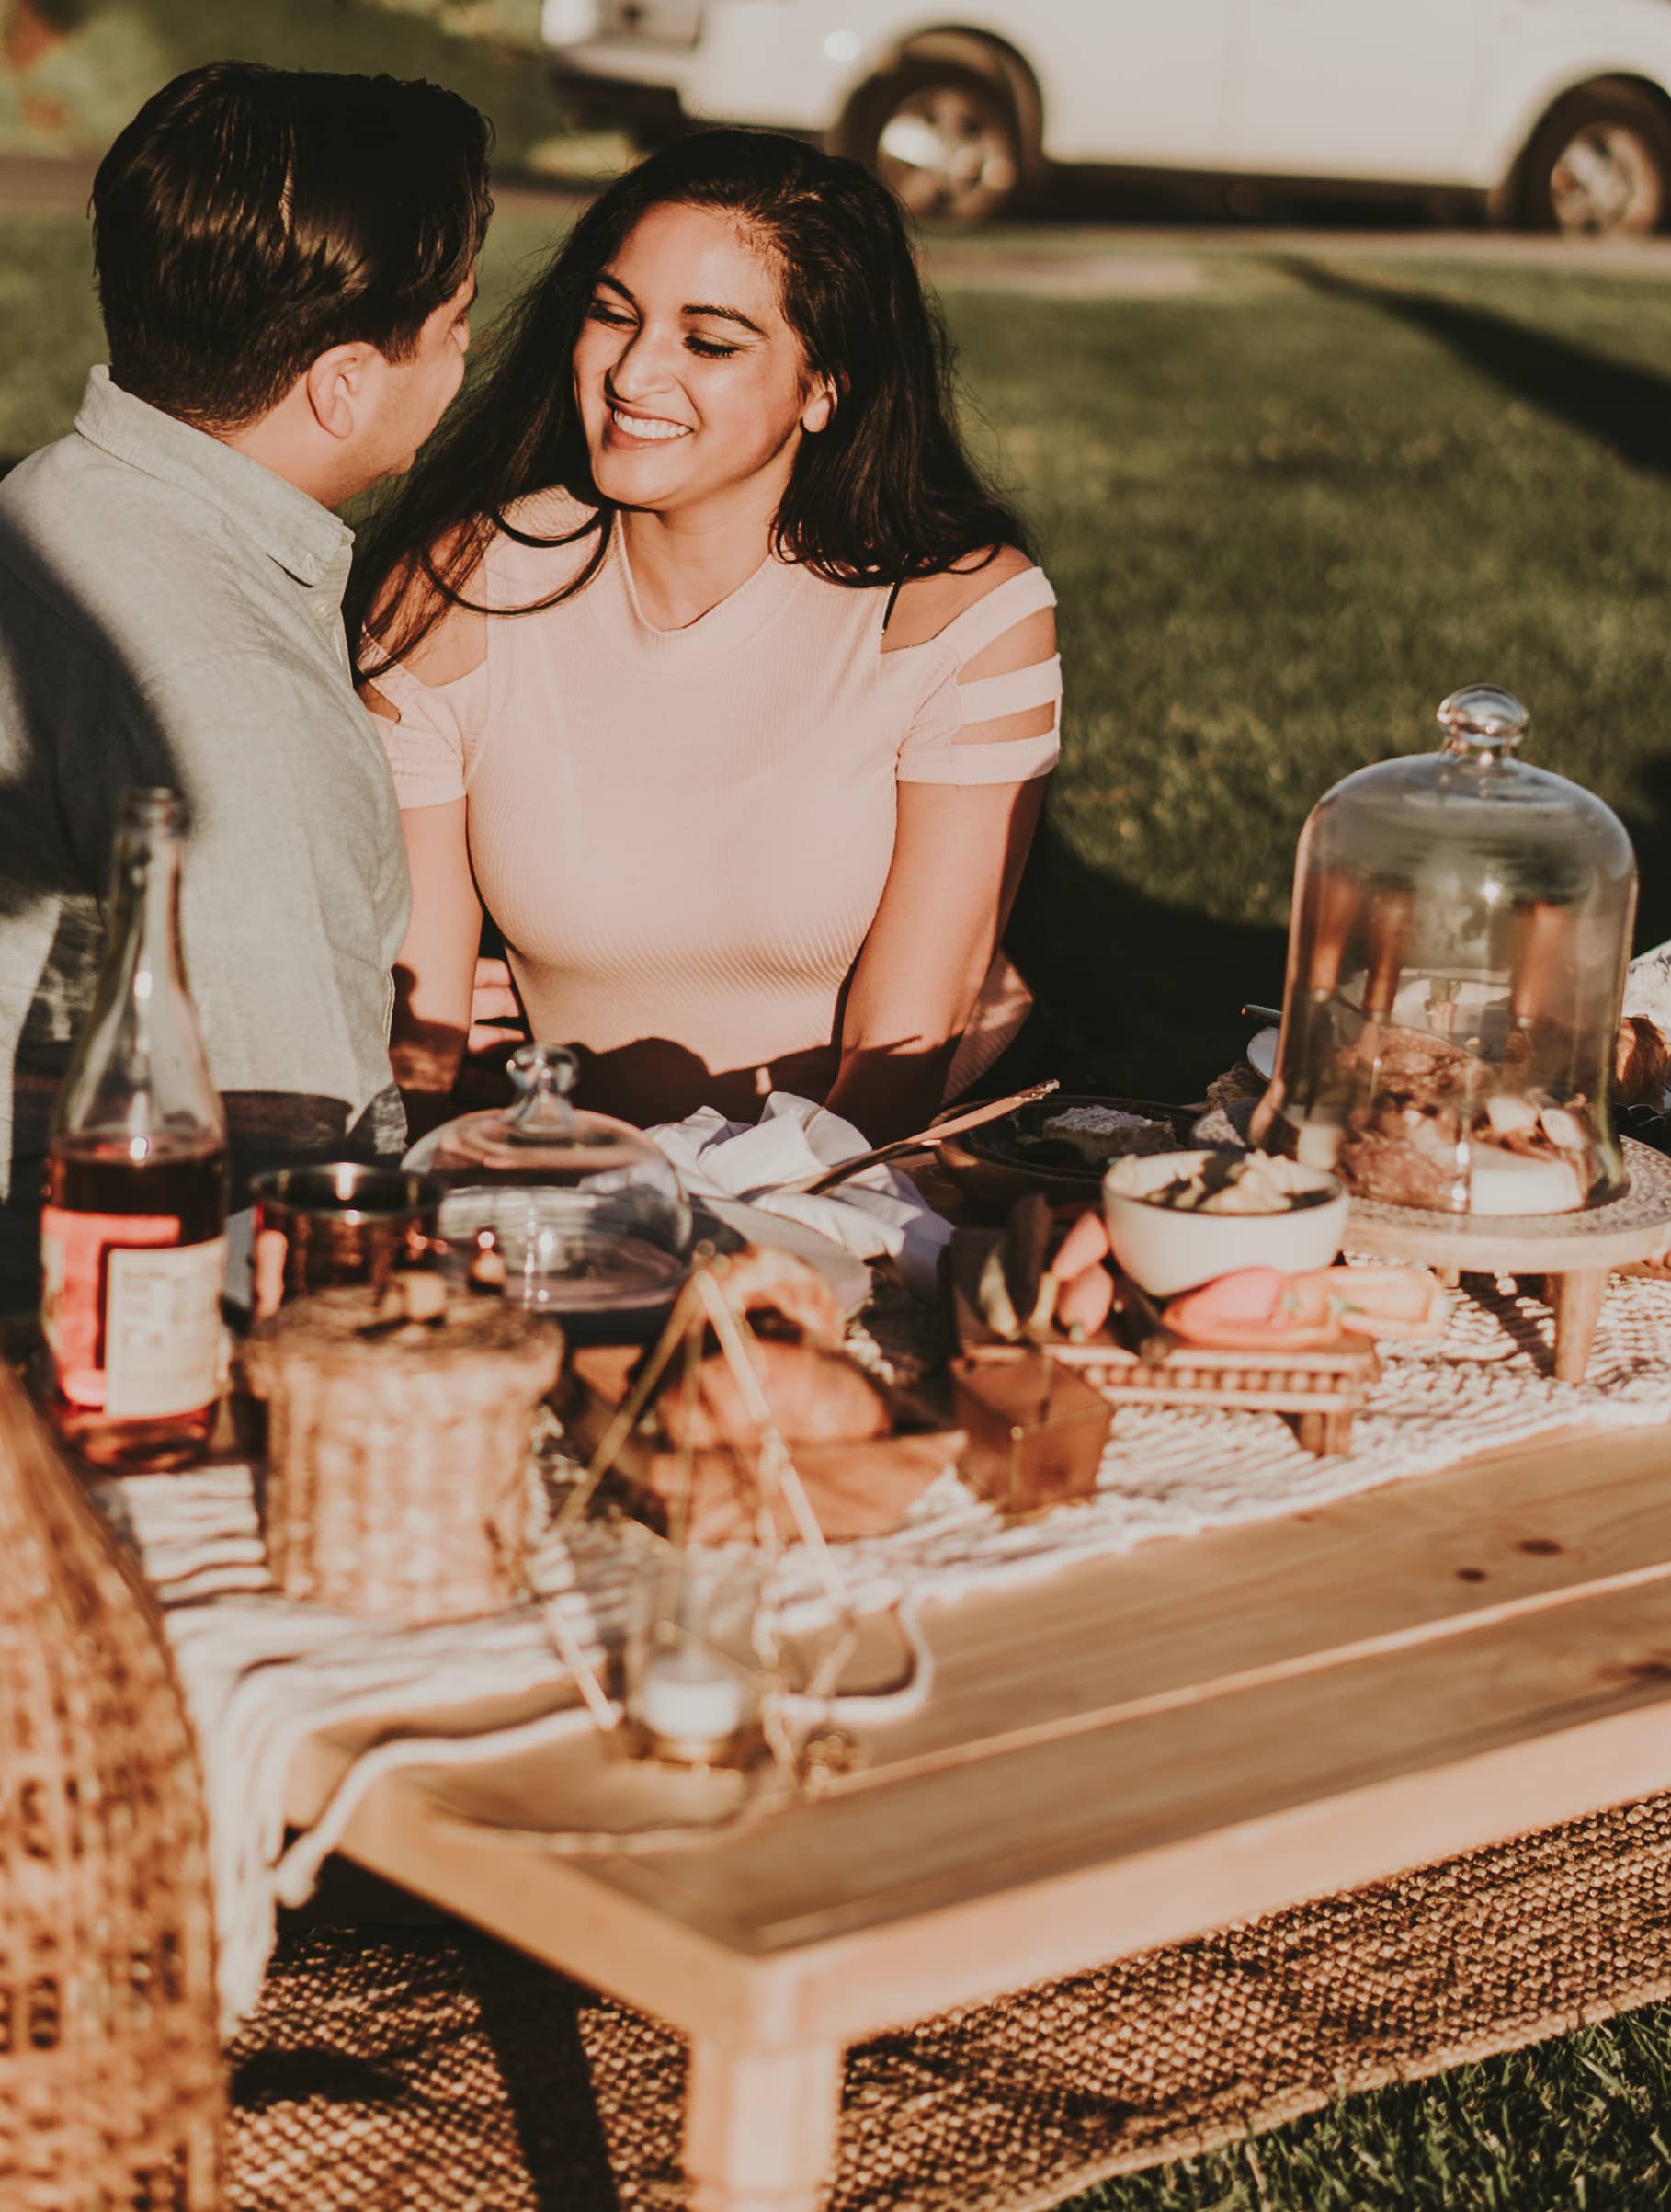 guy and girl smiling at a picnic